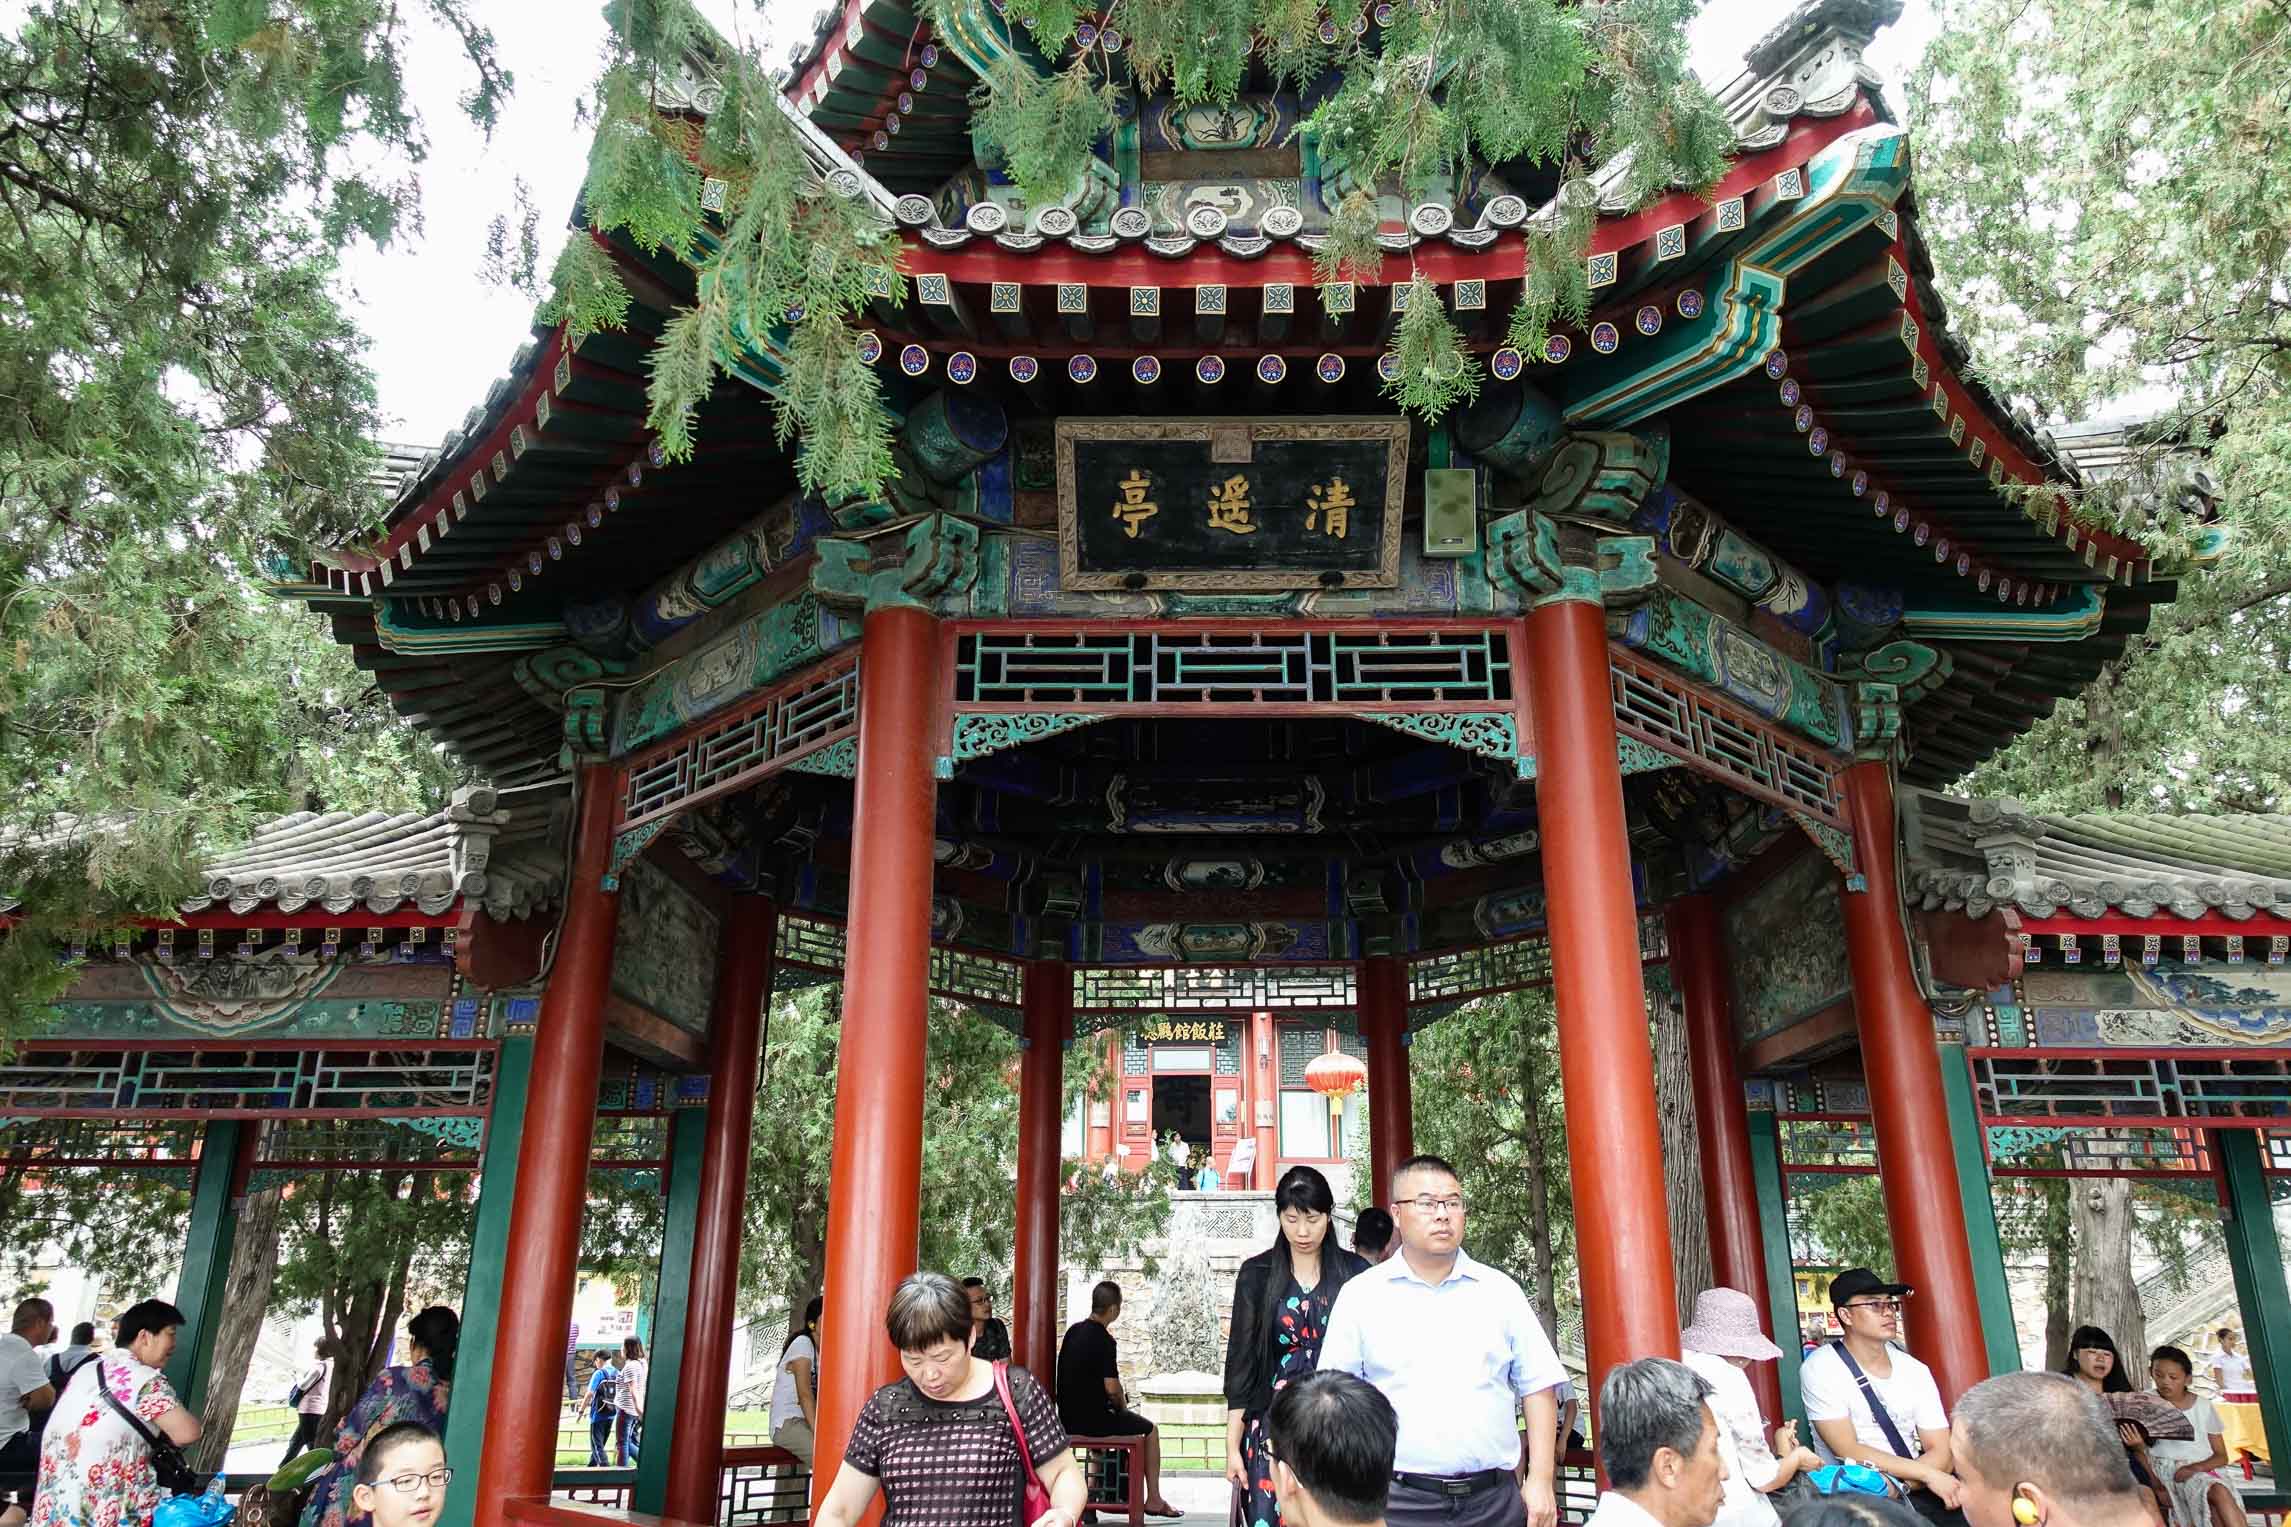 A pagoda along the walk